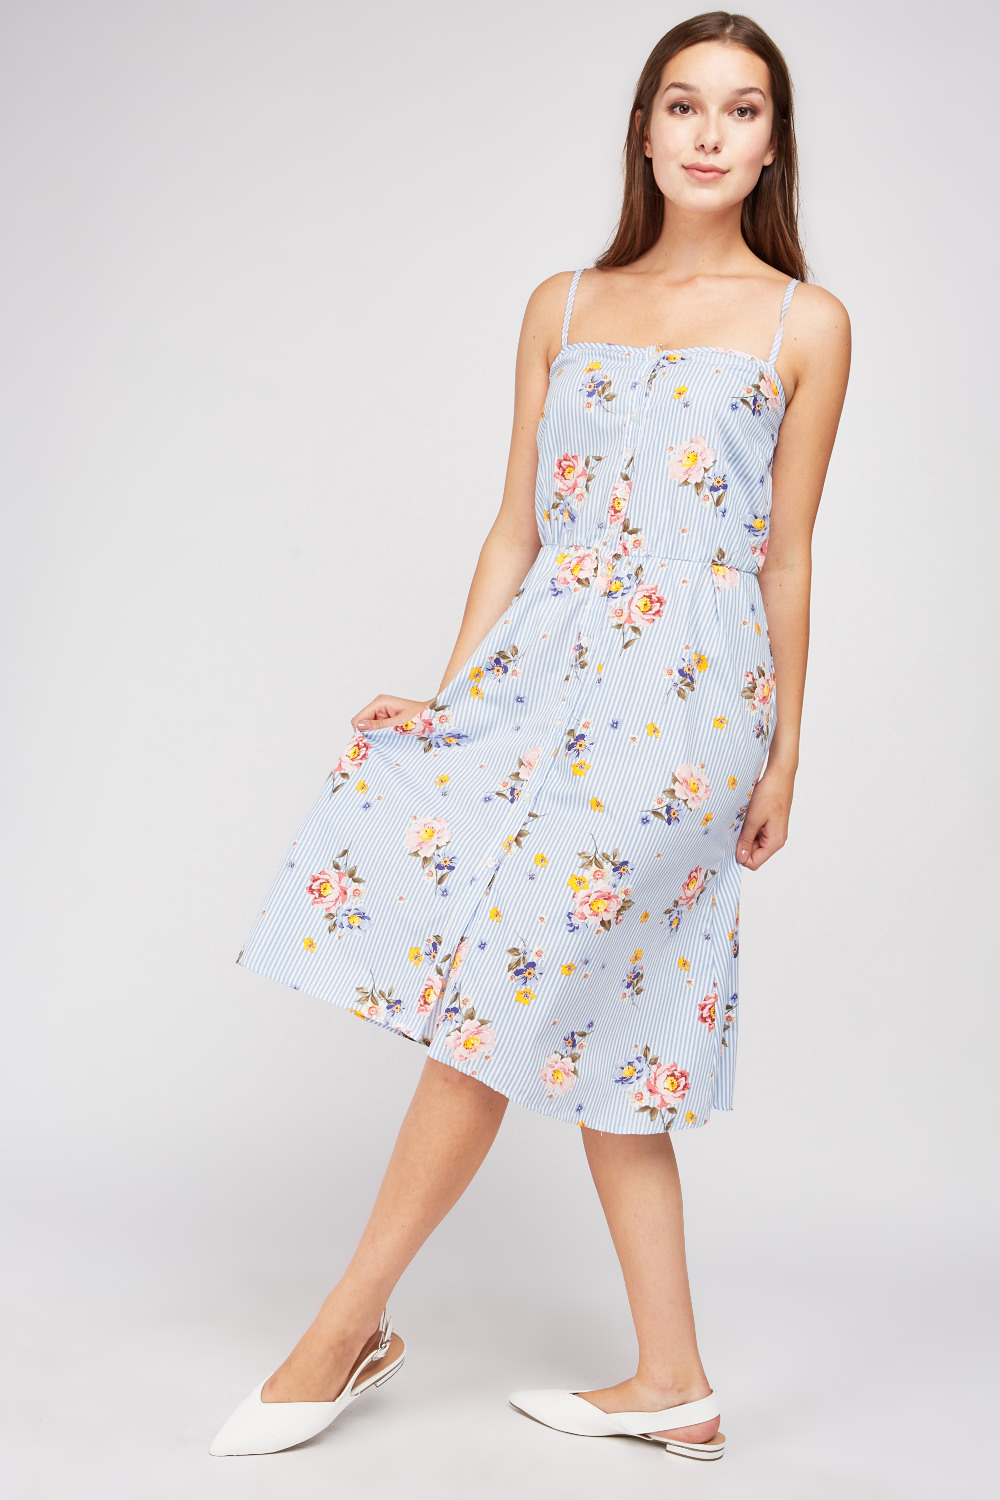 Flower Stripe Strappy Sun Dress - Just $6